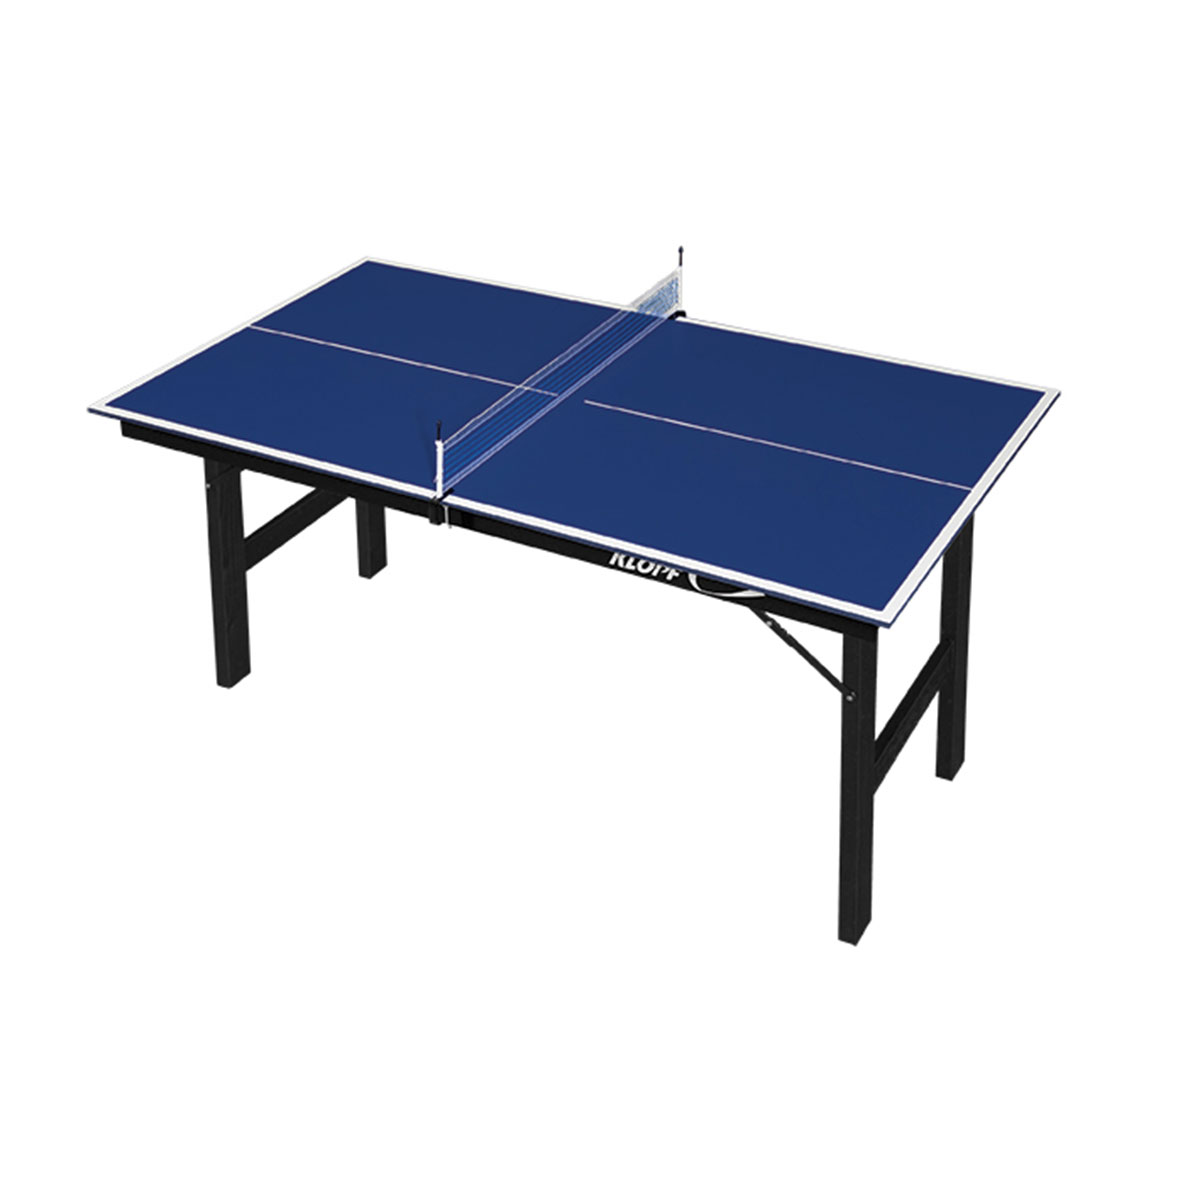 Tenis De Mesa Ping Pong Oficial Mdf 25mm Profissional 1090 : :  Esporte